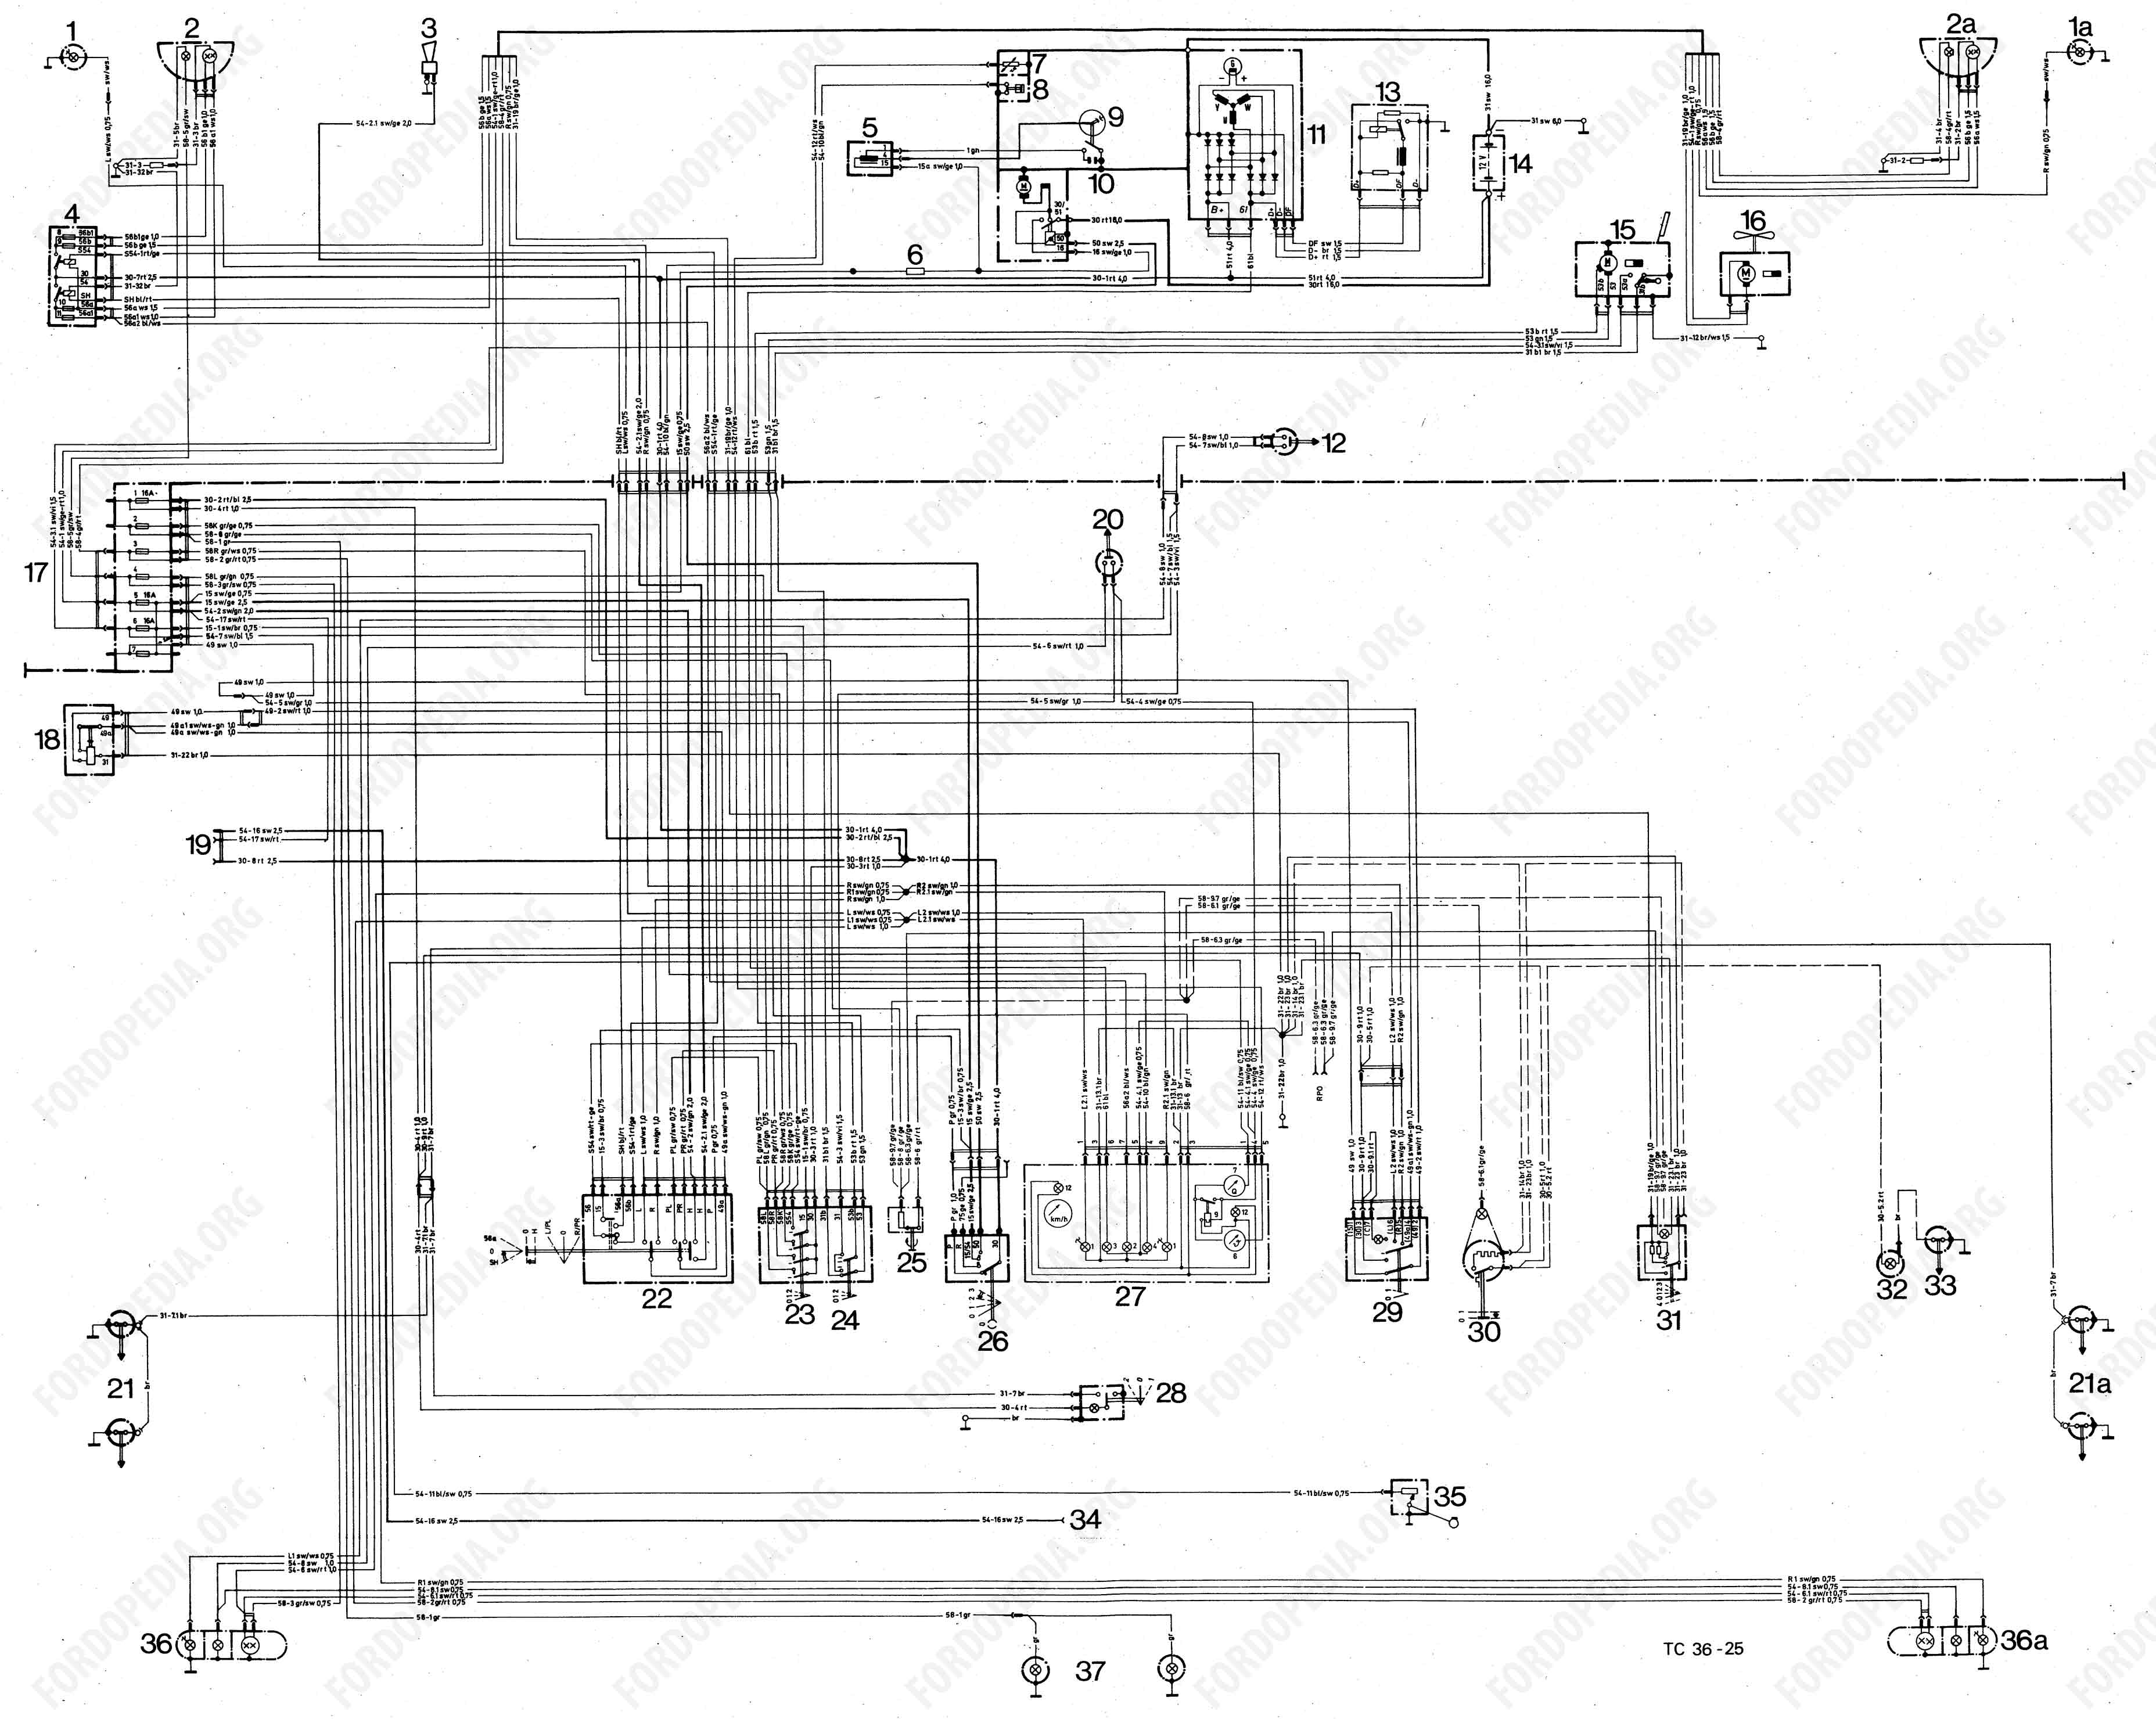 Ford cortina wiring diagram